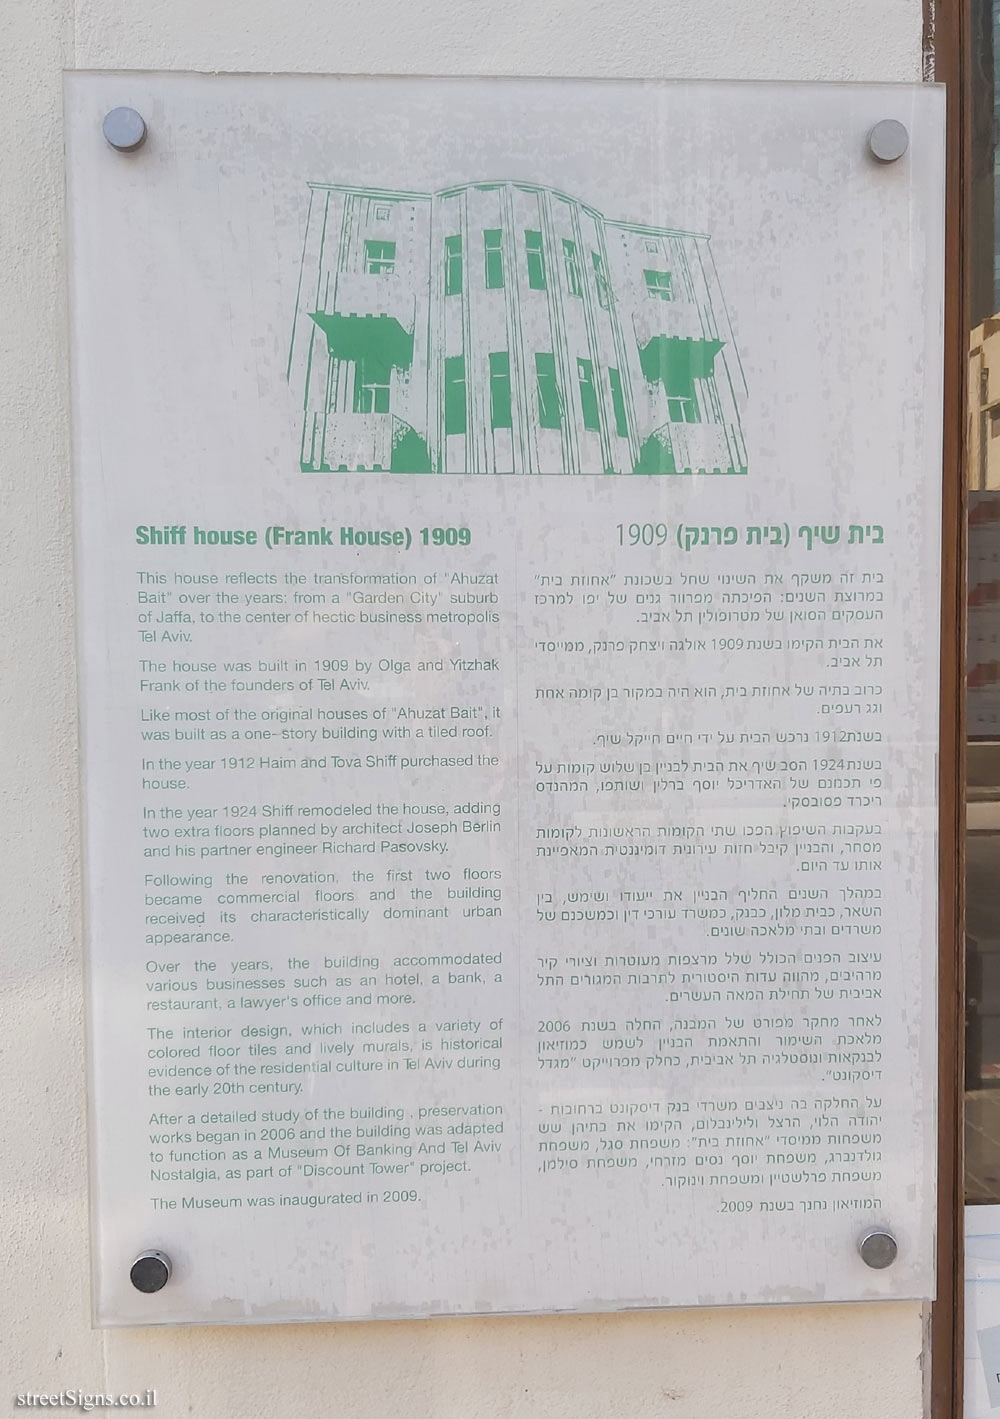 Tel Aviv - Shiff house (Frank House)